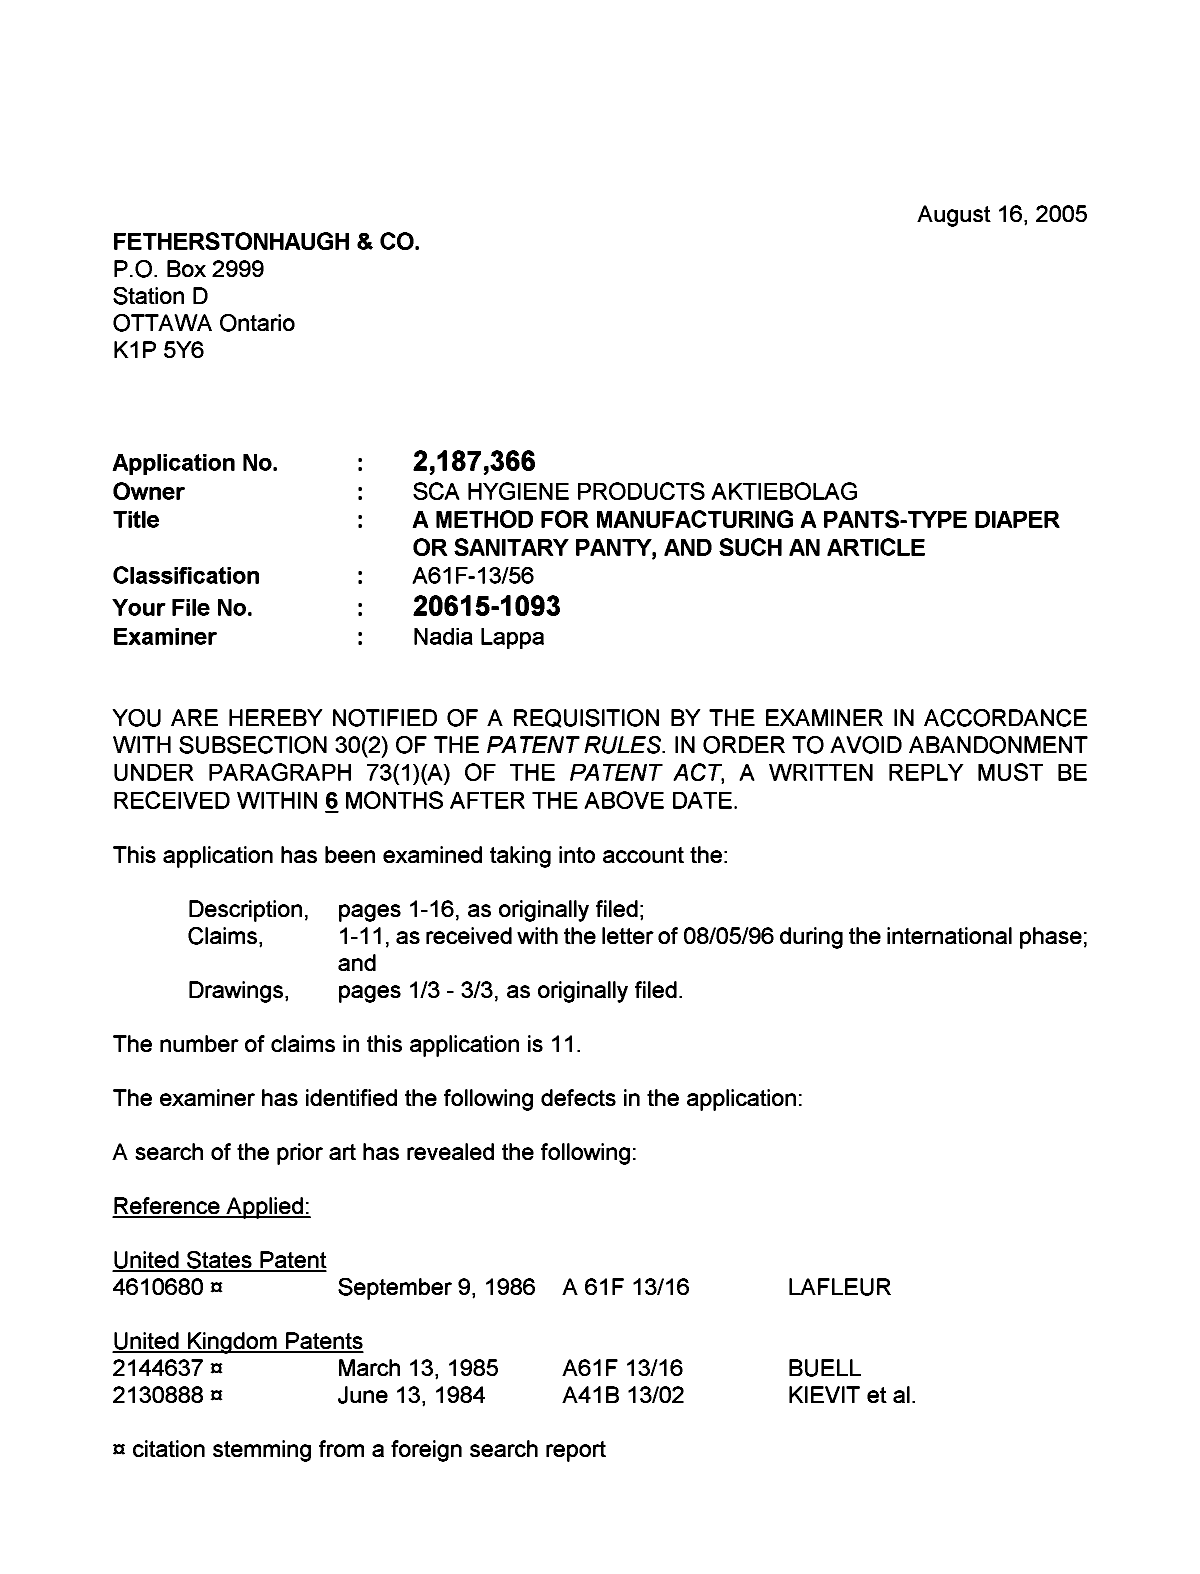 Canadian Patent Document 2187366. Prosecution-Amendment 20050816. Image 1 of 2